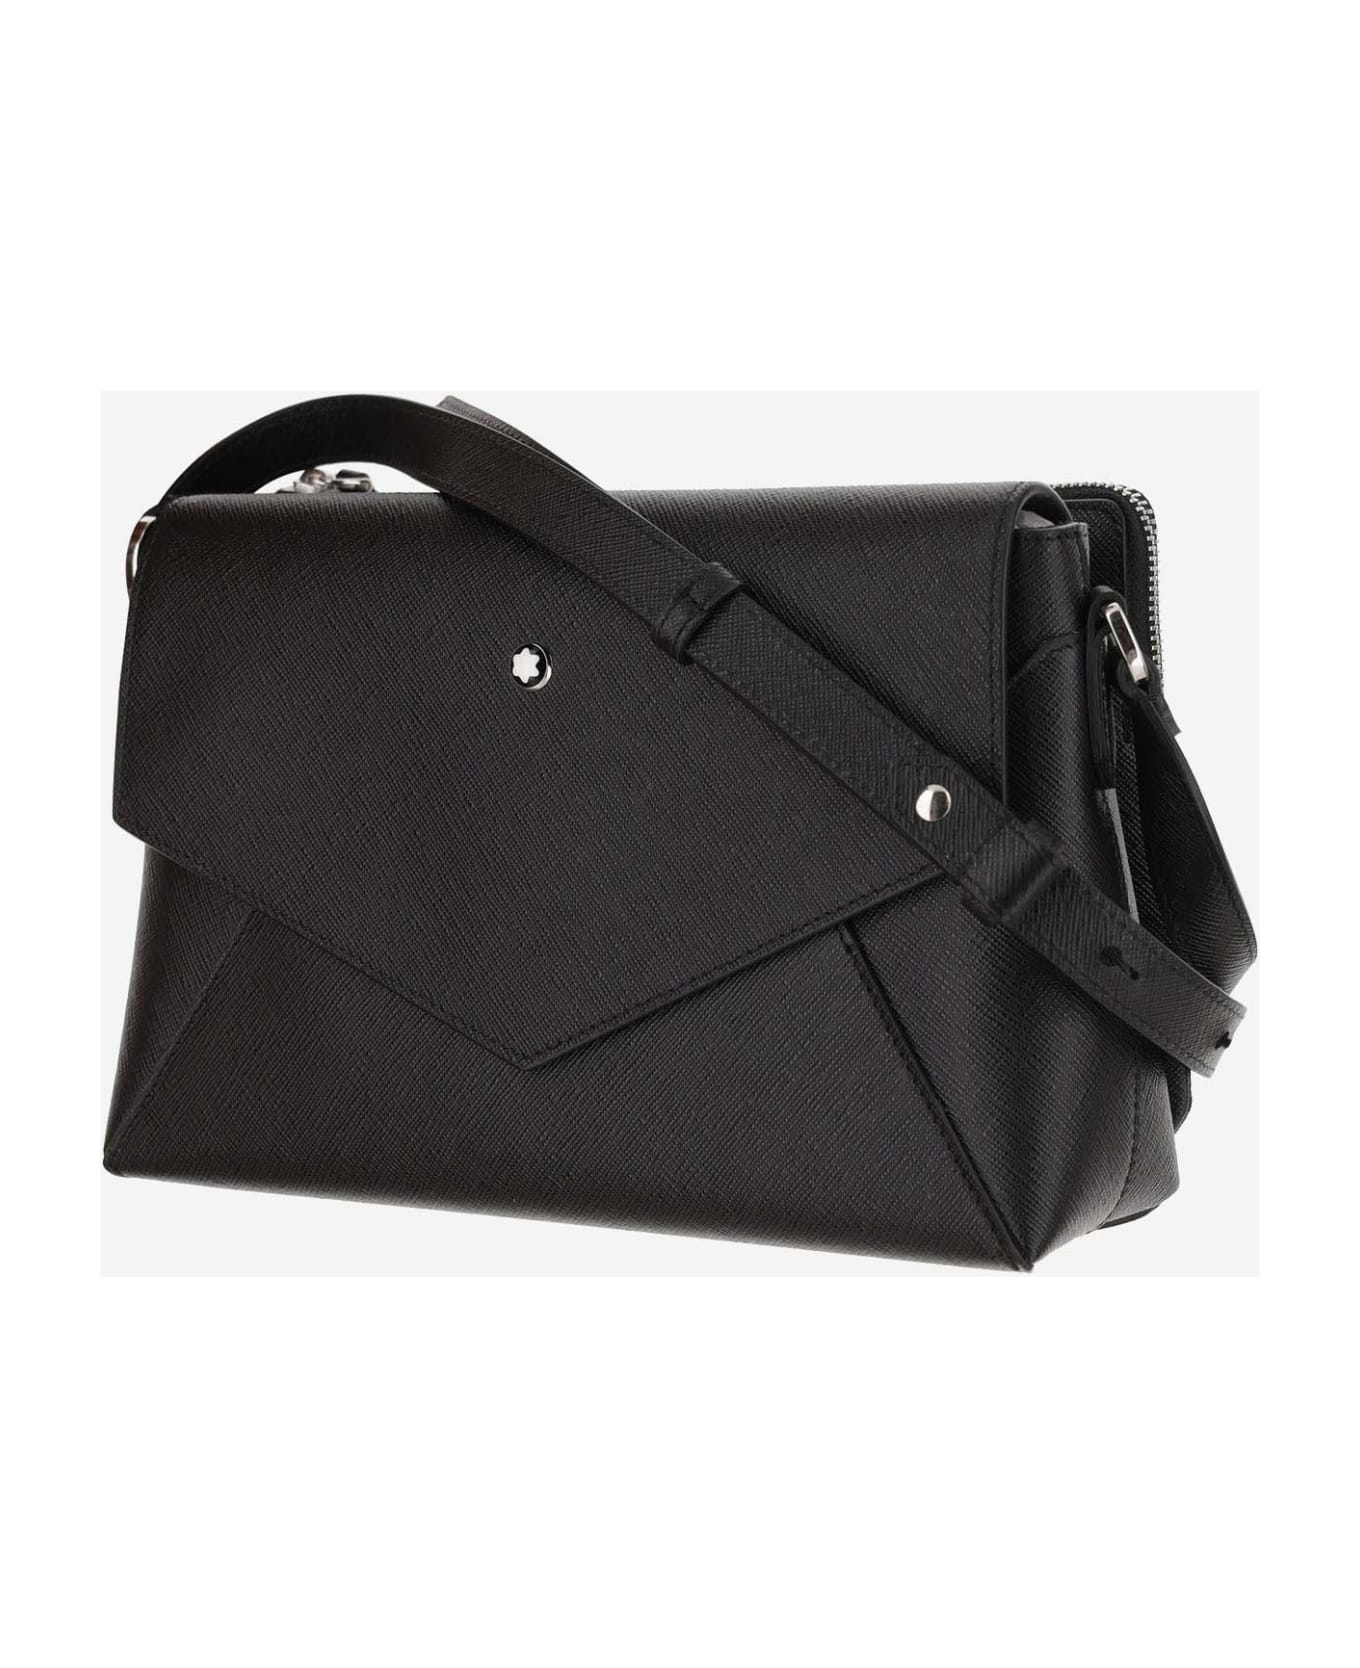 Montblanc Double Sartorial Bag - Black